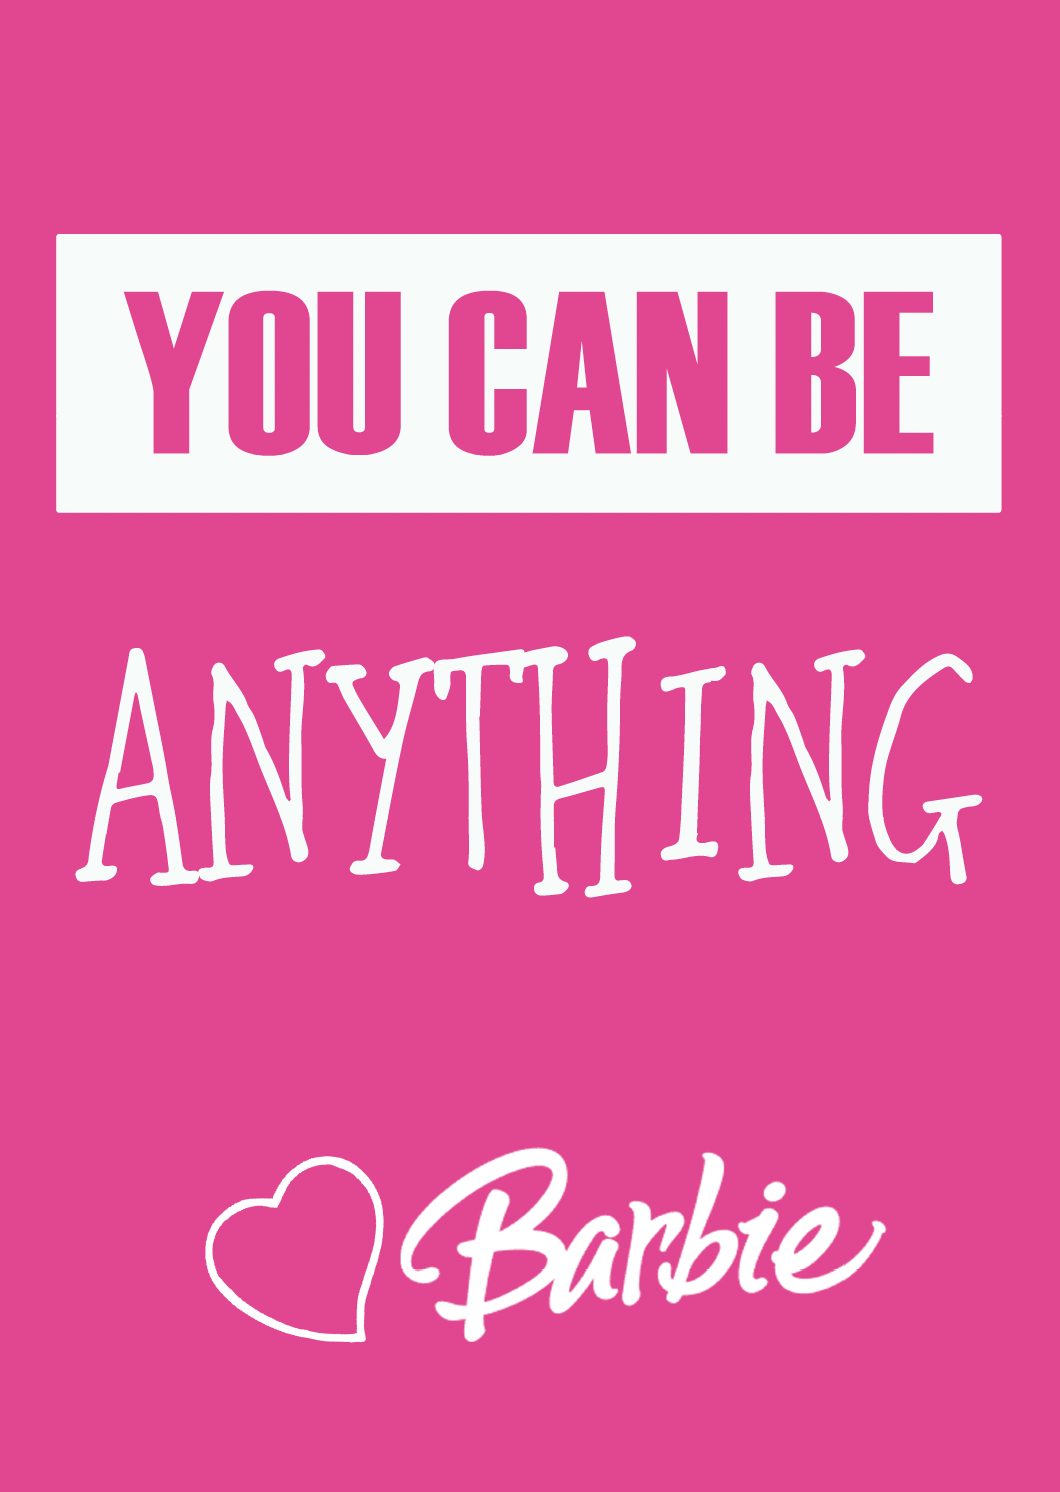 Barbie themed girl poster nz